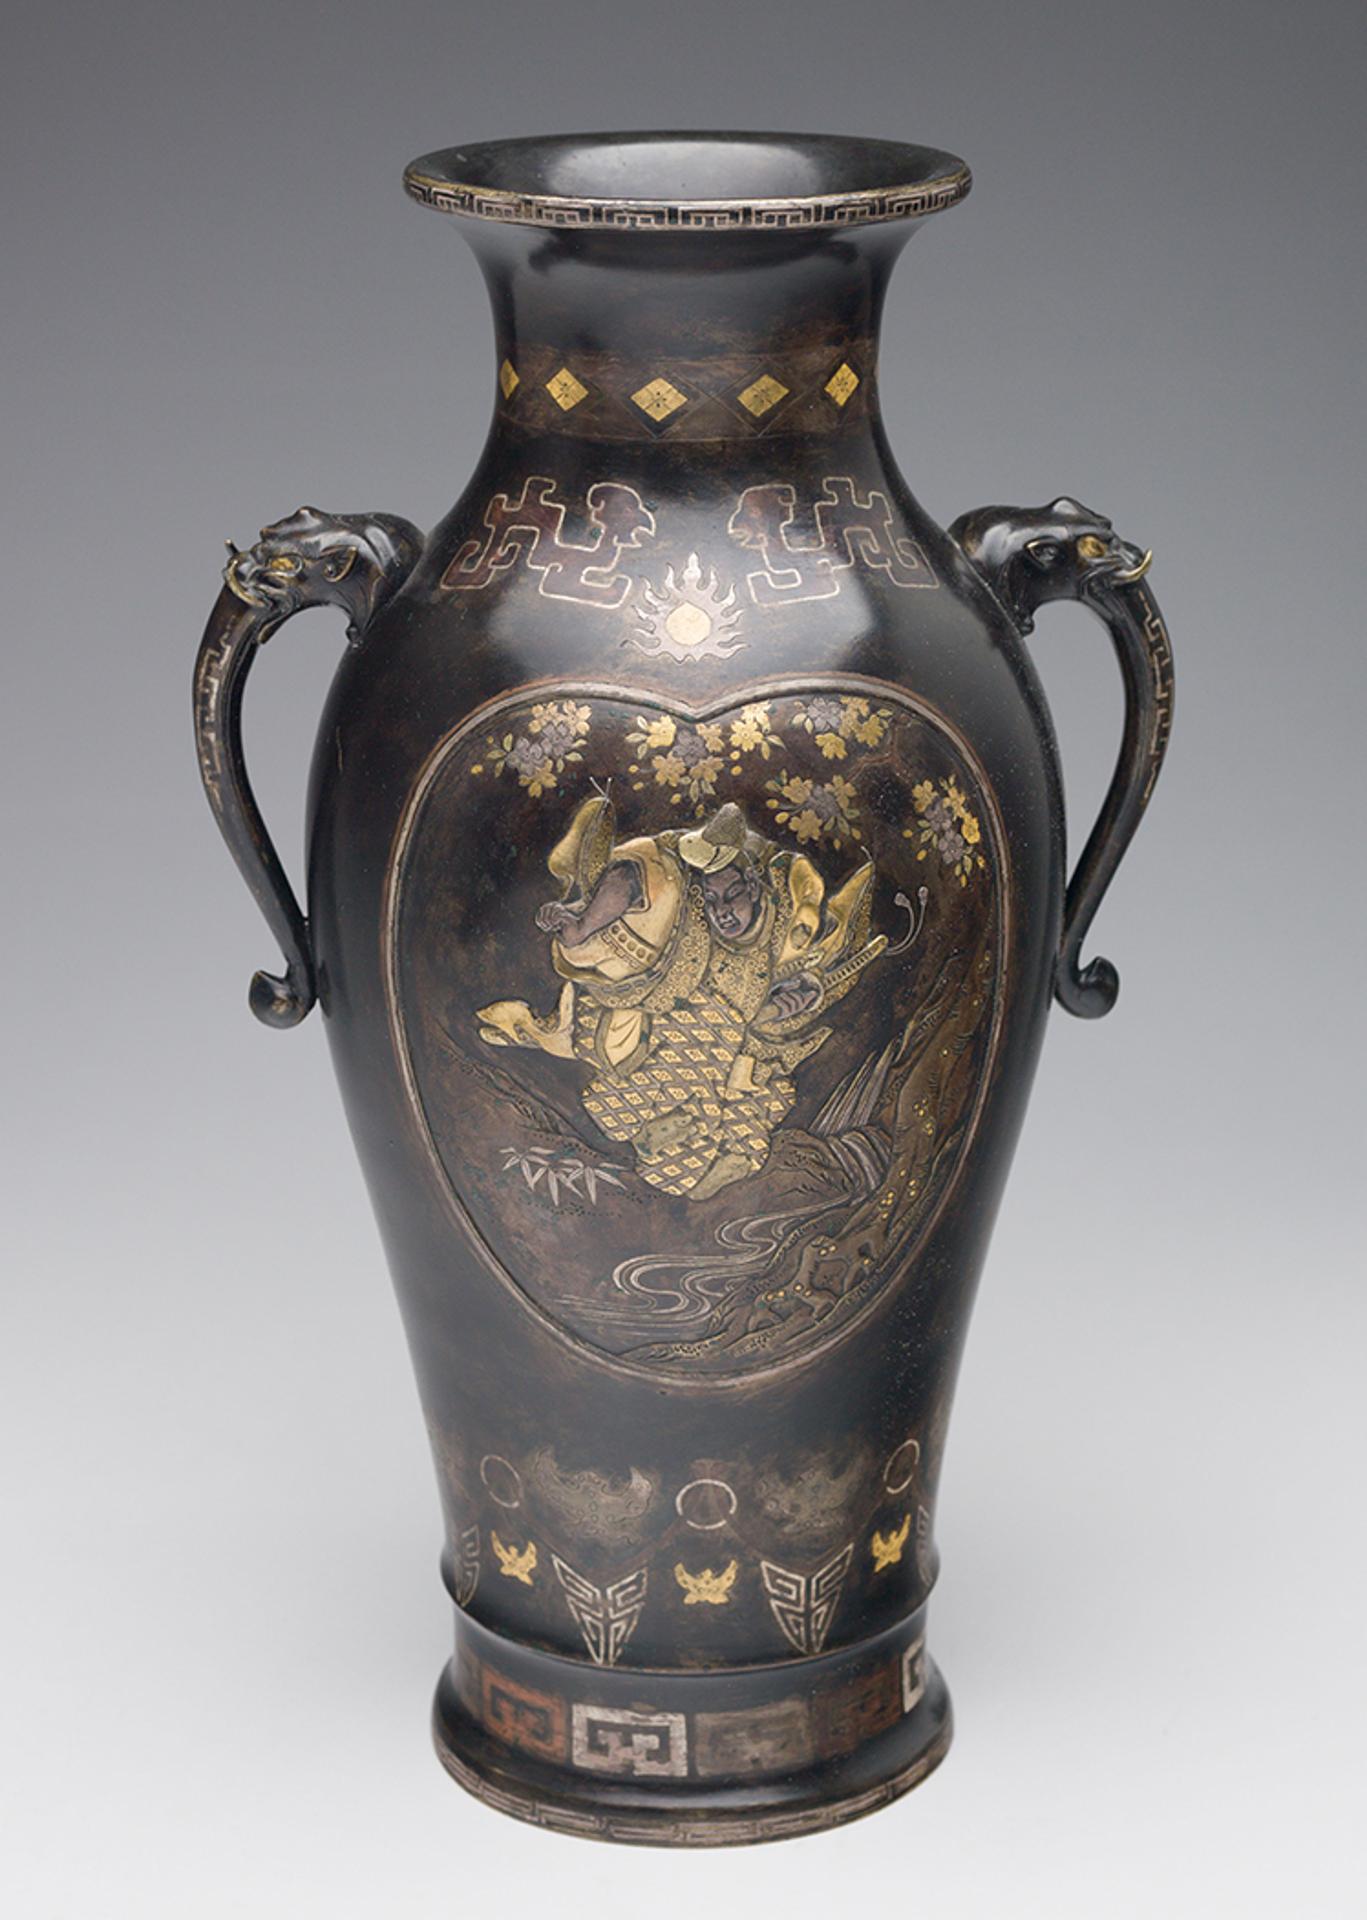 Japanese Art - A Japanese Mixed-Metal Presentation Vase, Meiji Period, Late 19th Century